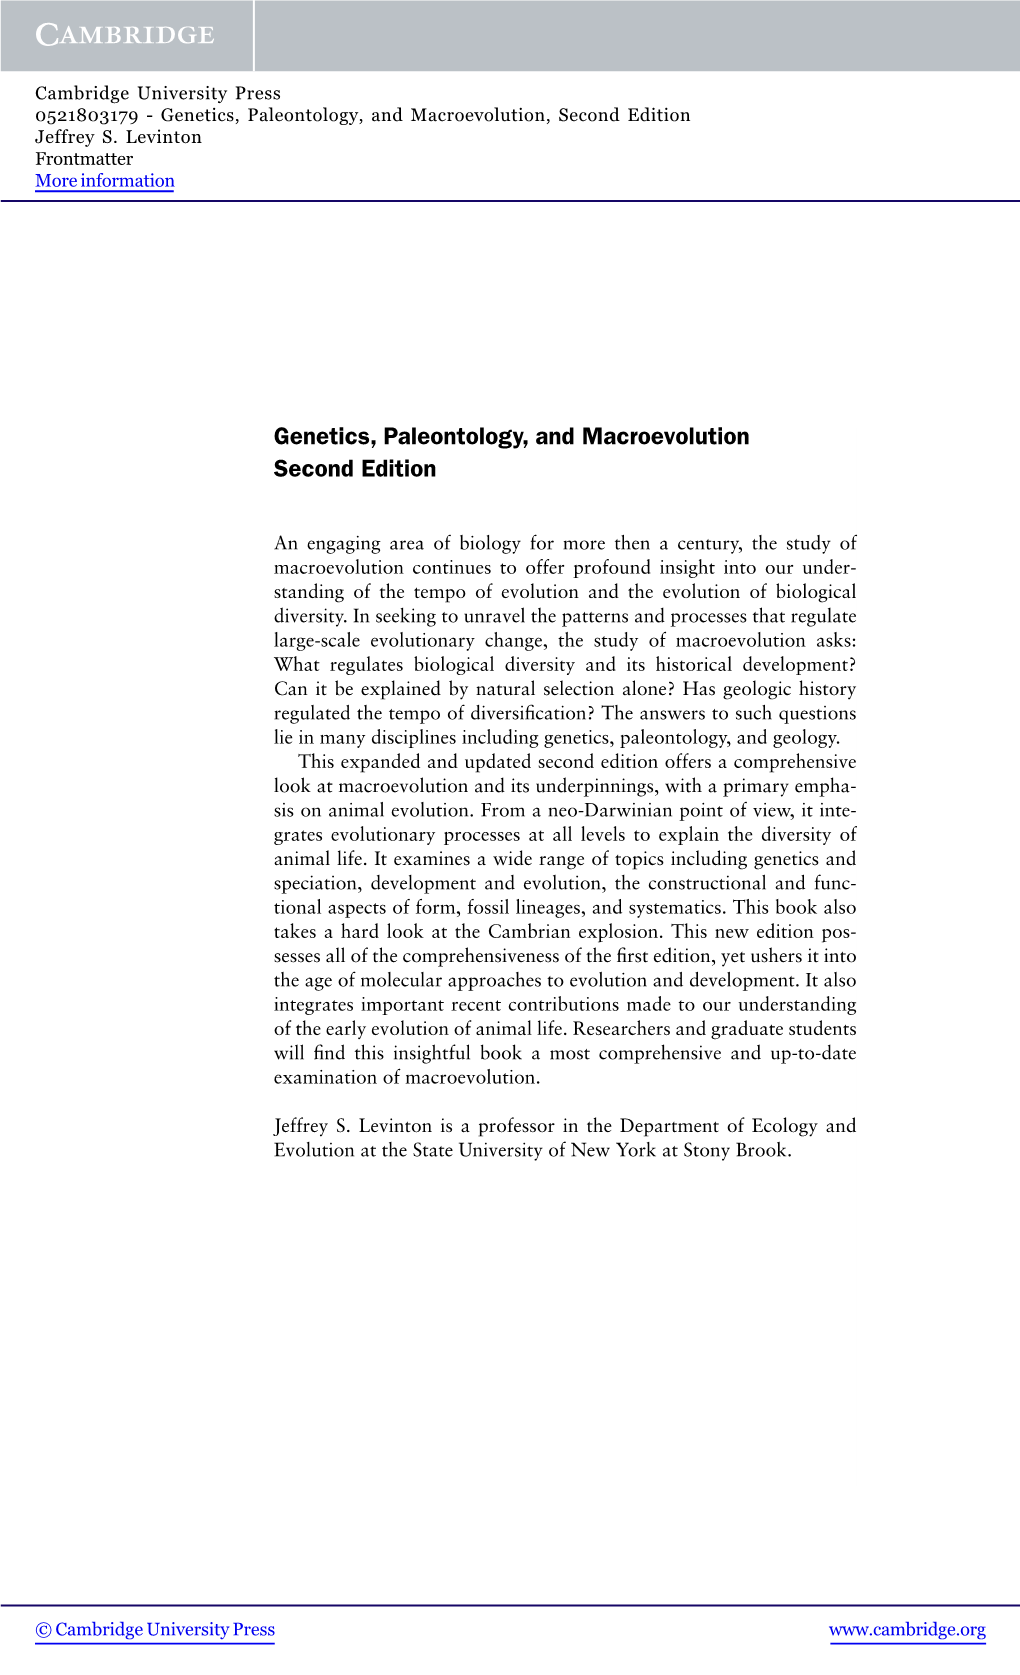 Genetics, Paleontology, and Macroevolution Second Edition